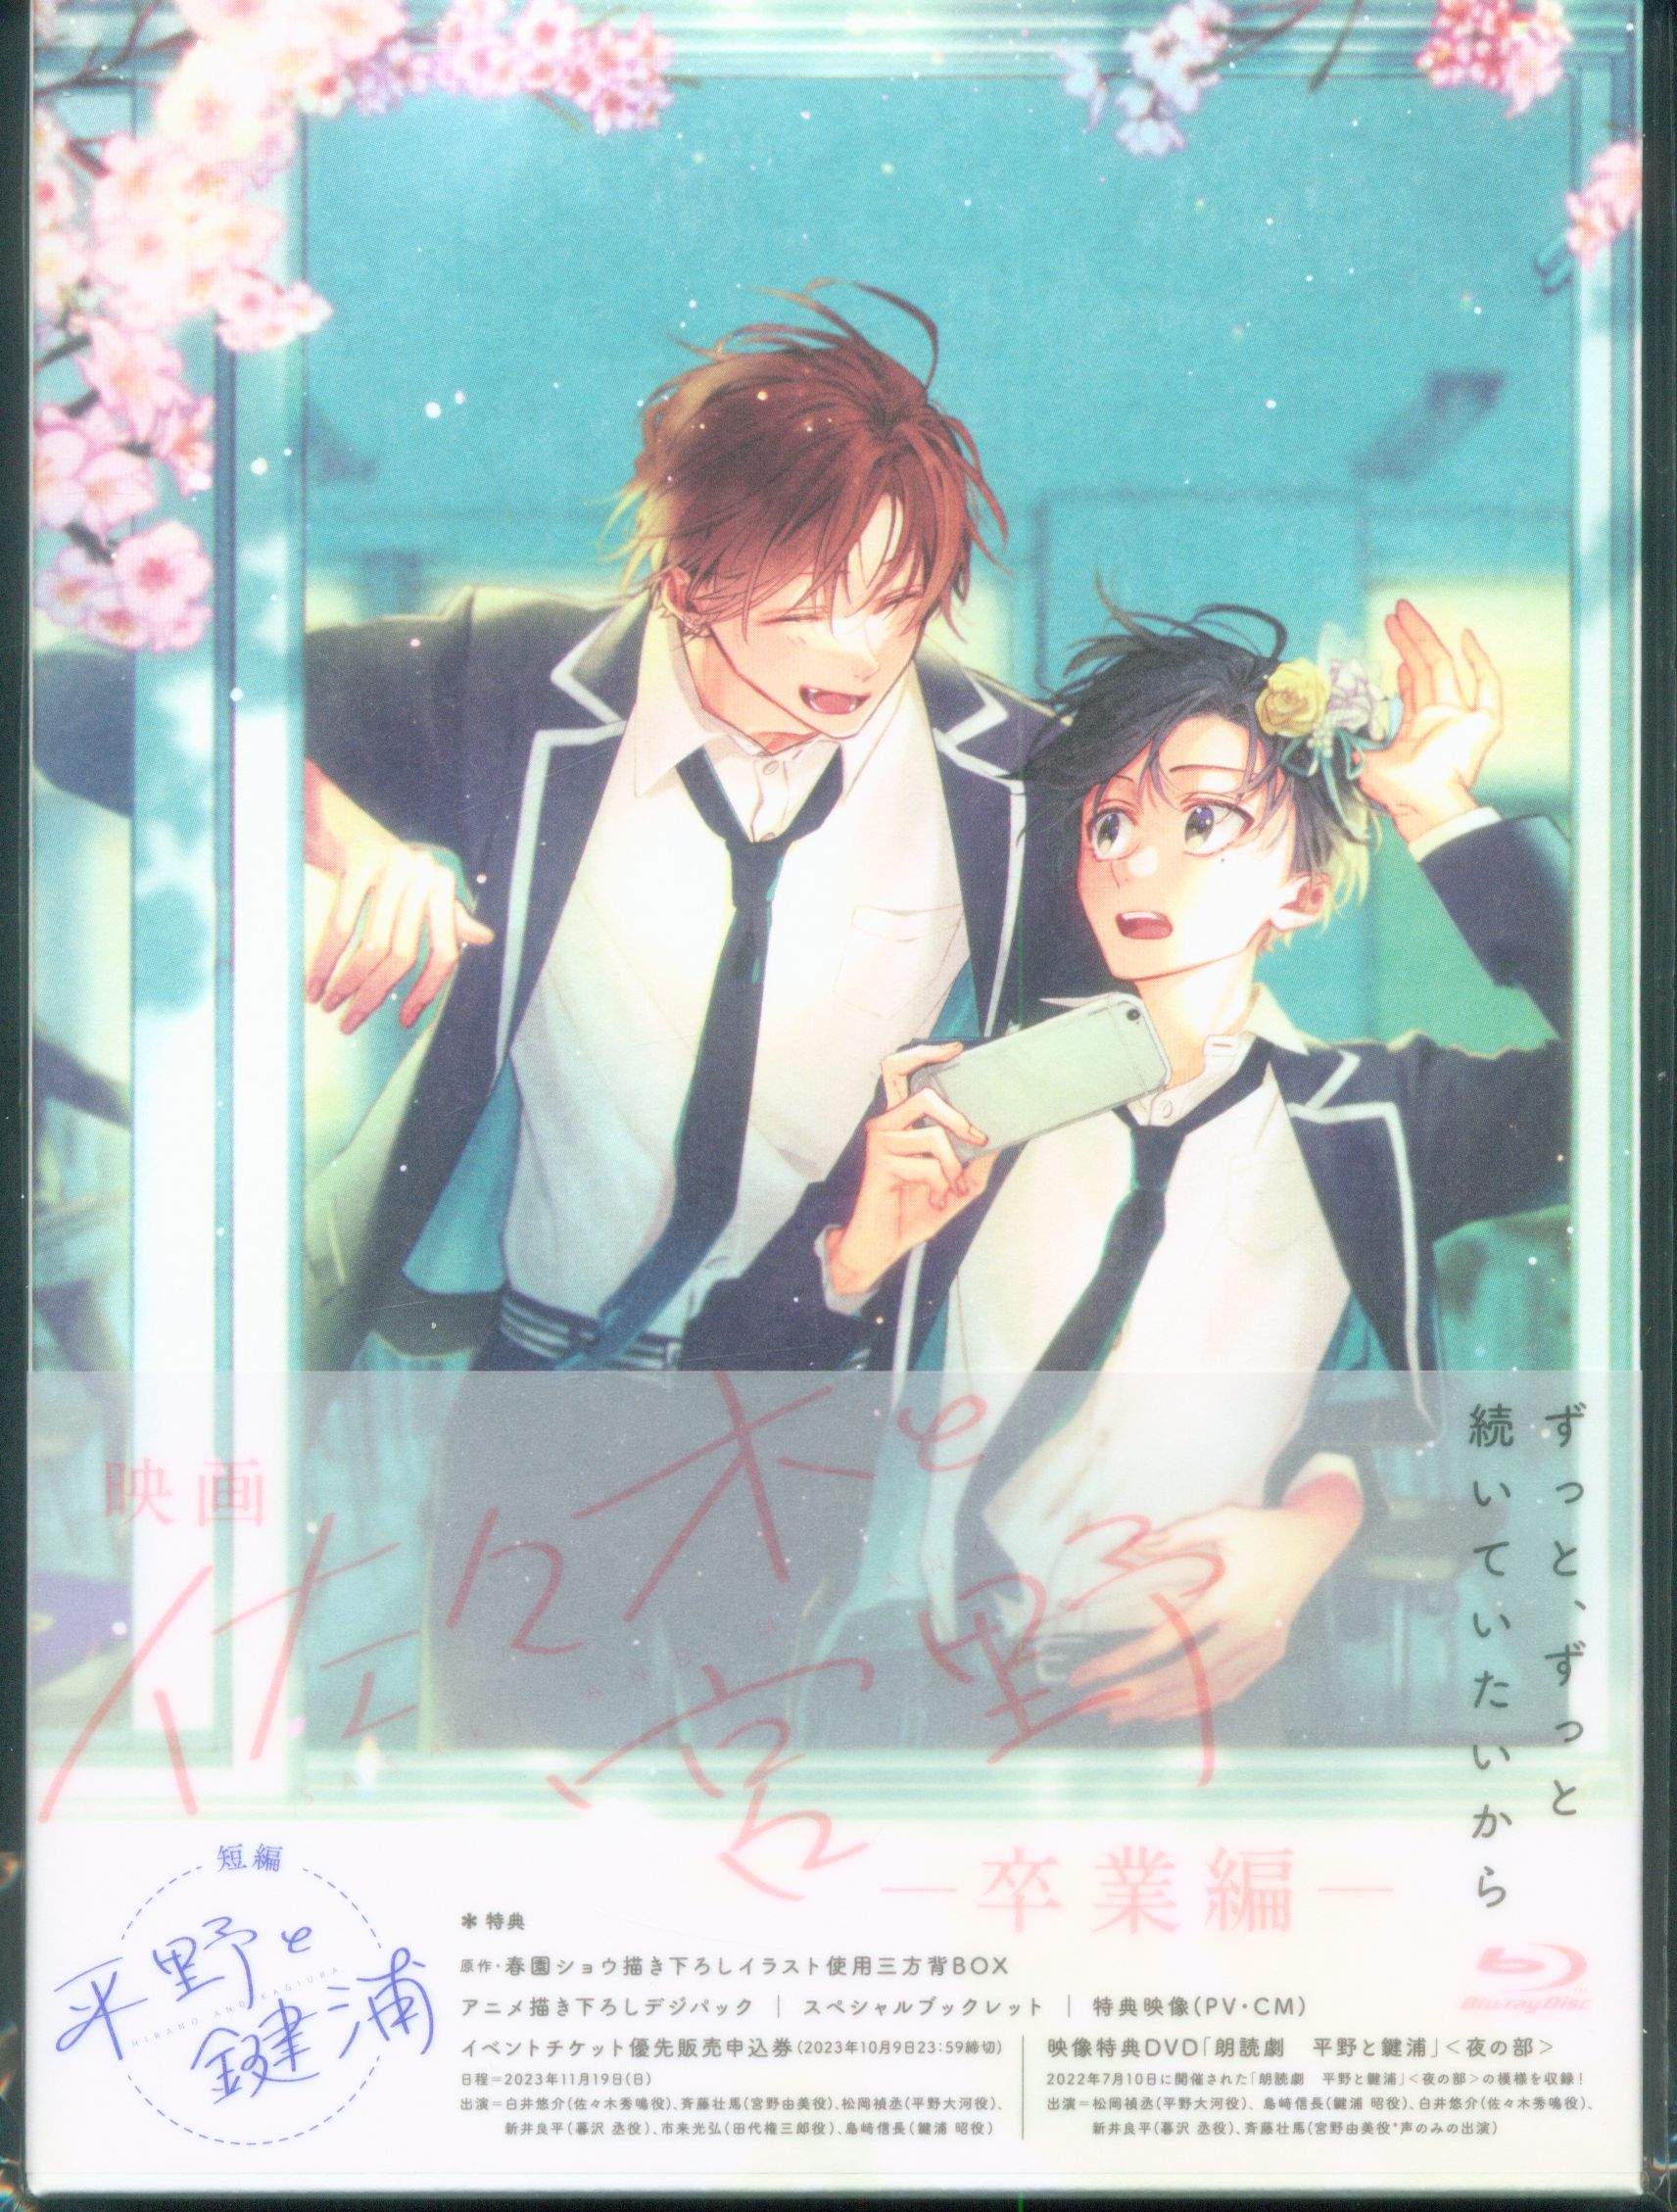 Sasaki and Miyano - Graduation - / Short story  Hirano and Kagiura Blu-ray  NEW